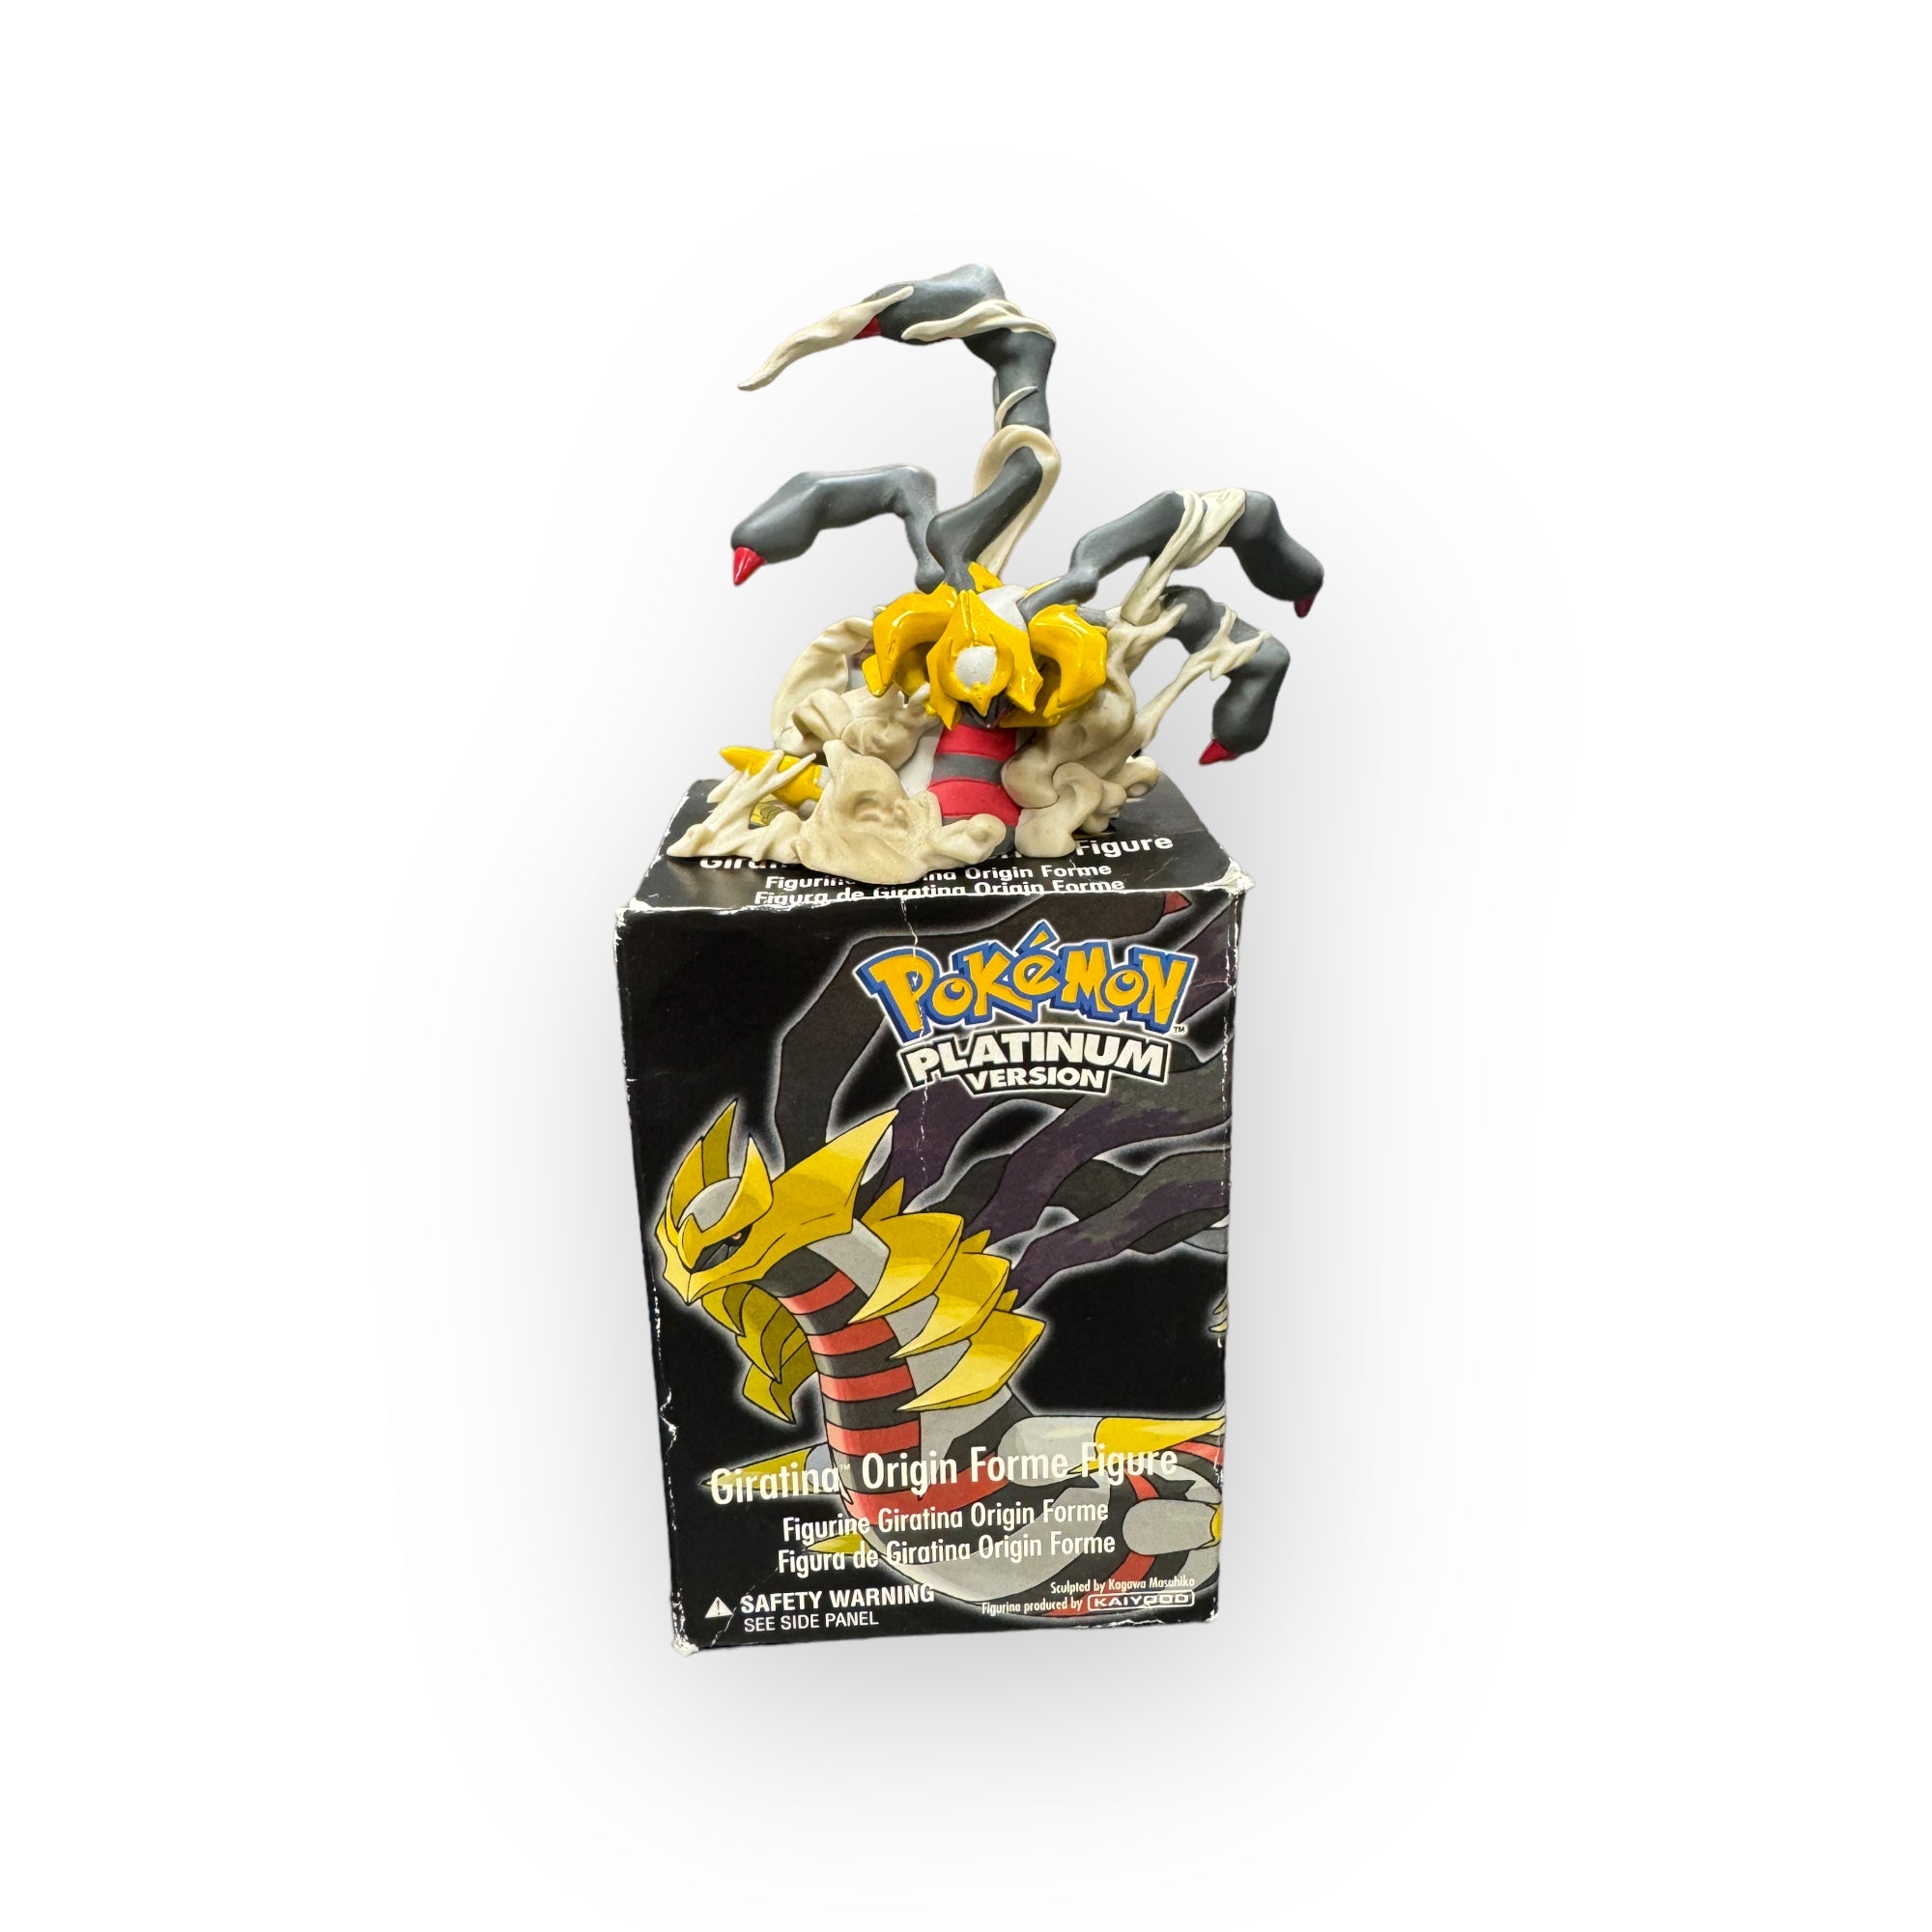 Pokémon Platinum Giratina Figure With Box Gamestop Preorder Promo 2009 Rare (Pre-Owned/Box Wear)